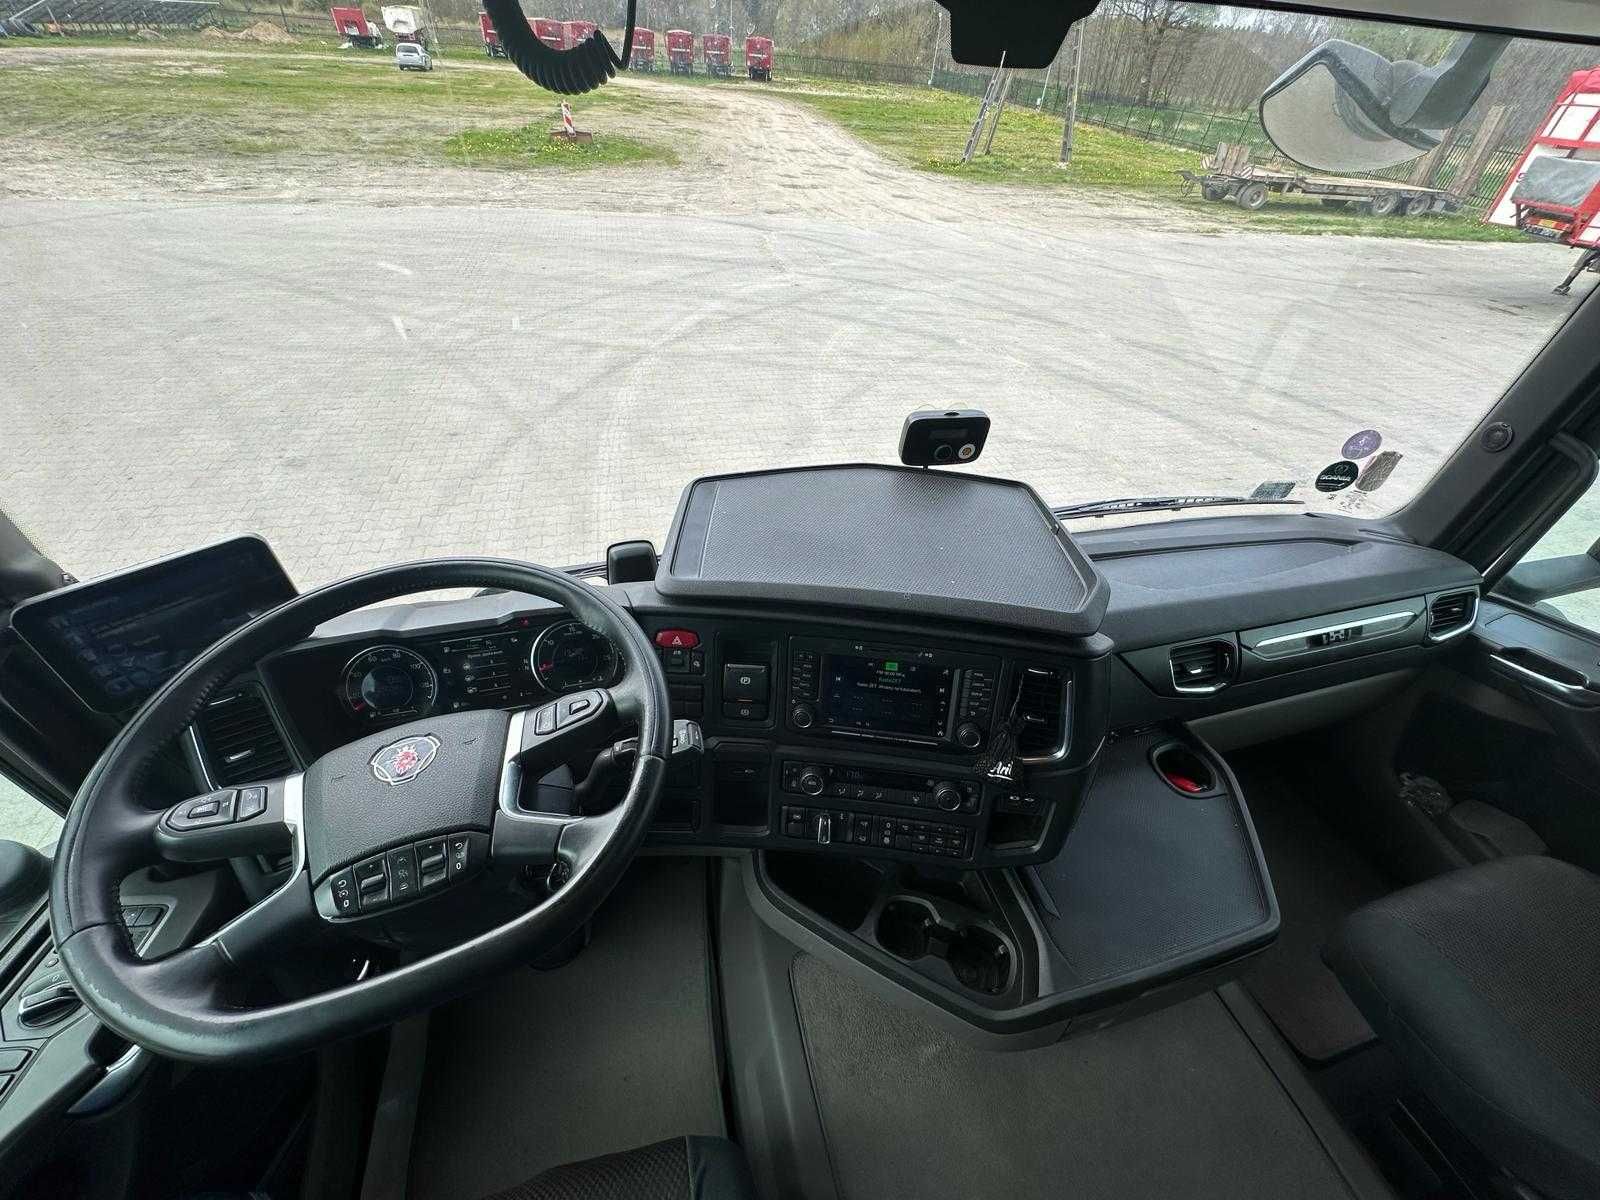 Scania R410 LNG 2020, Cesja Leasingu